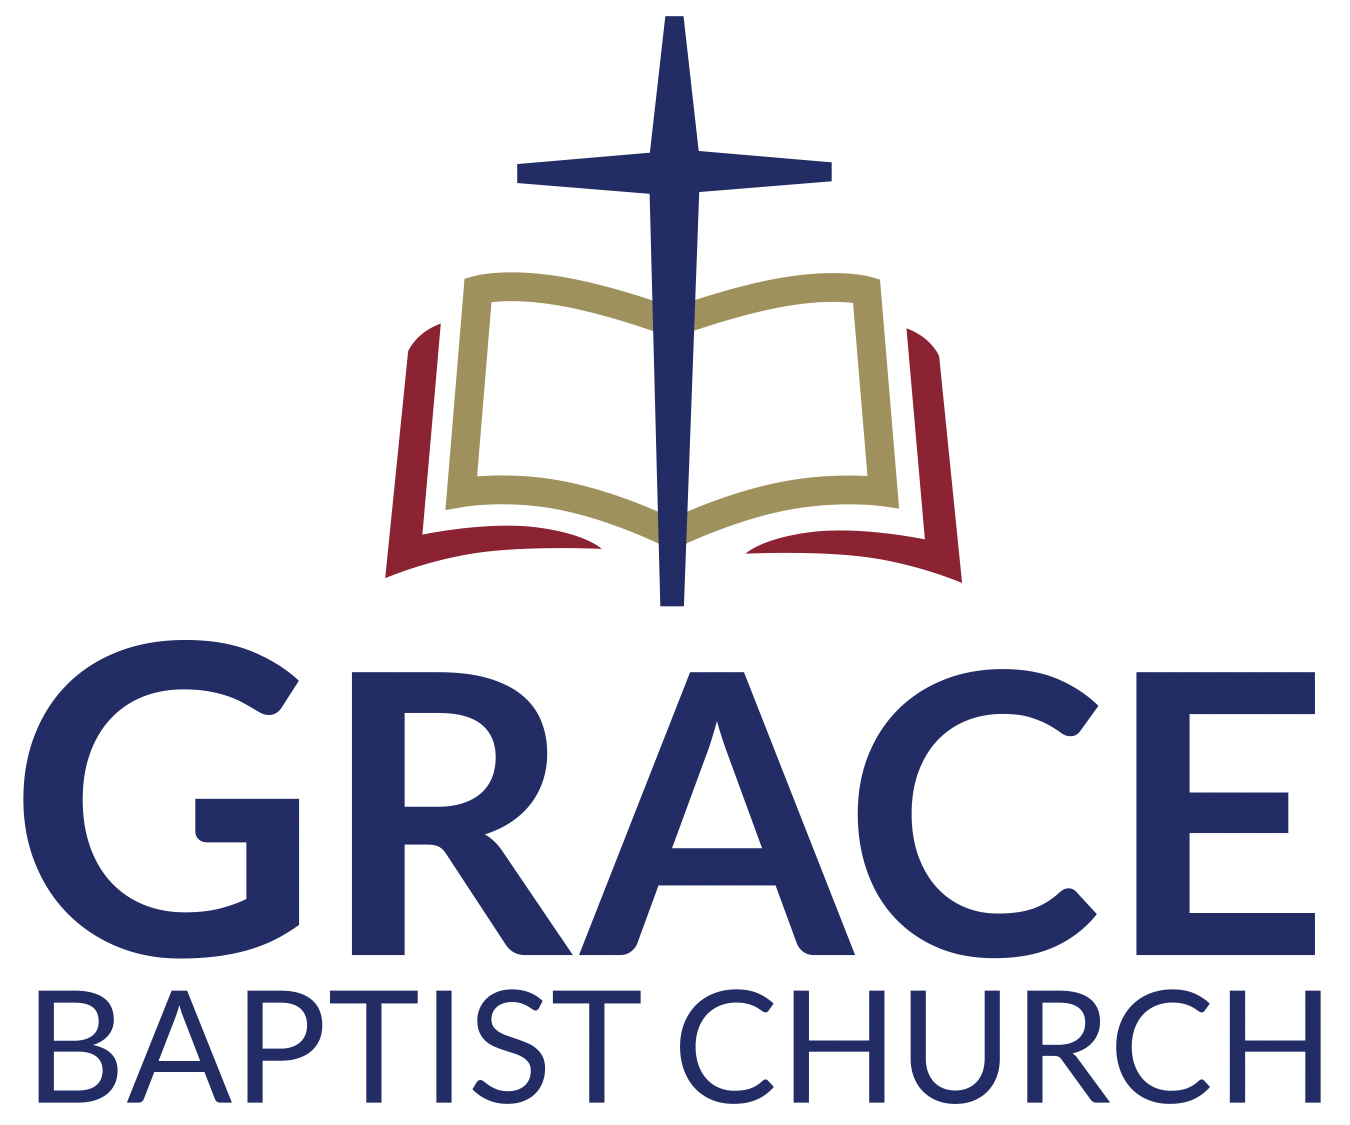 Grace baptist church Logos